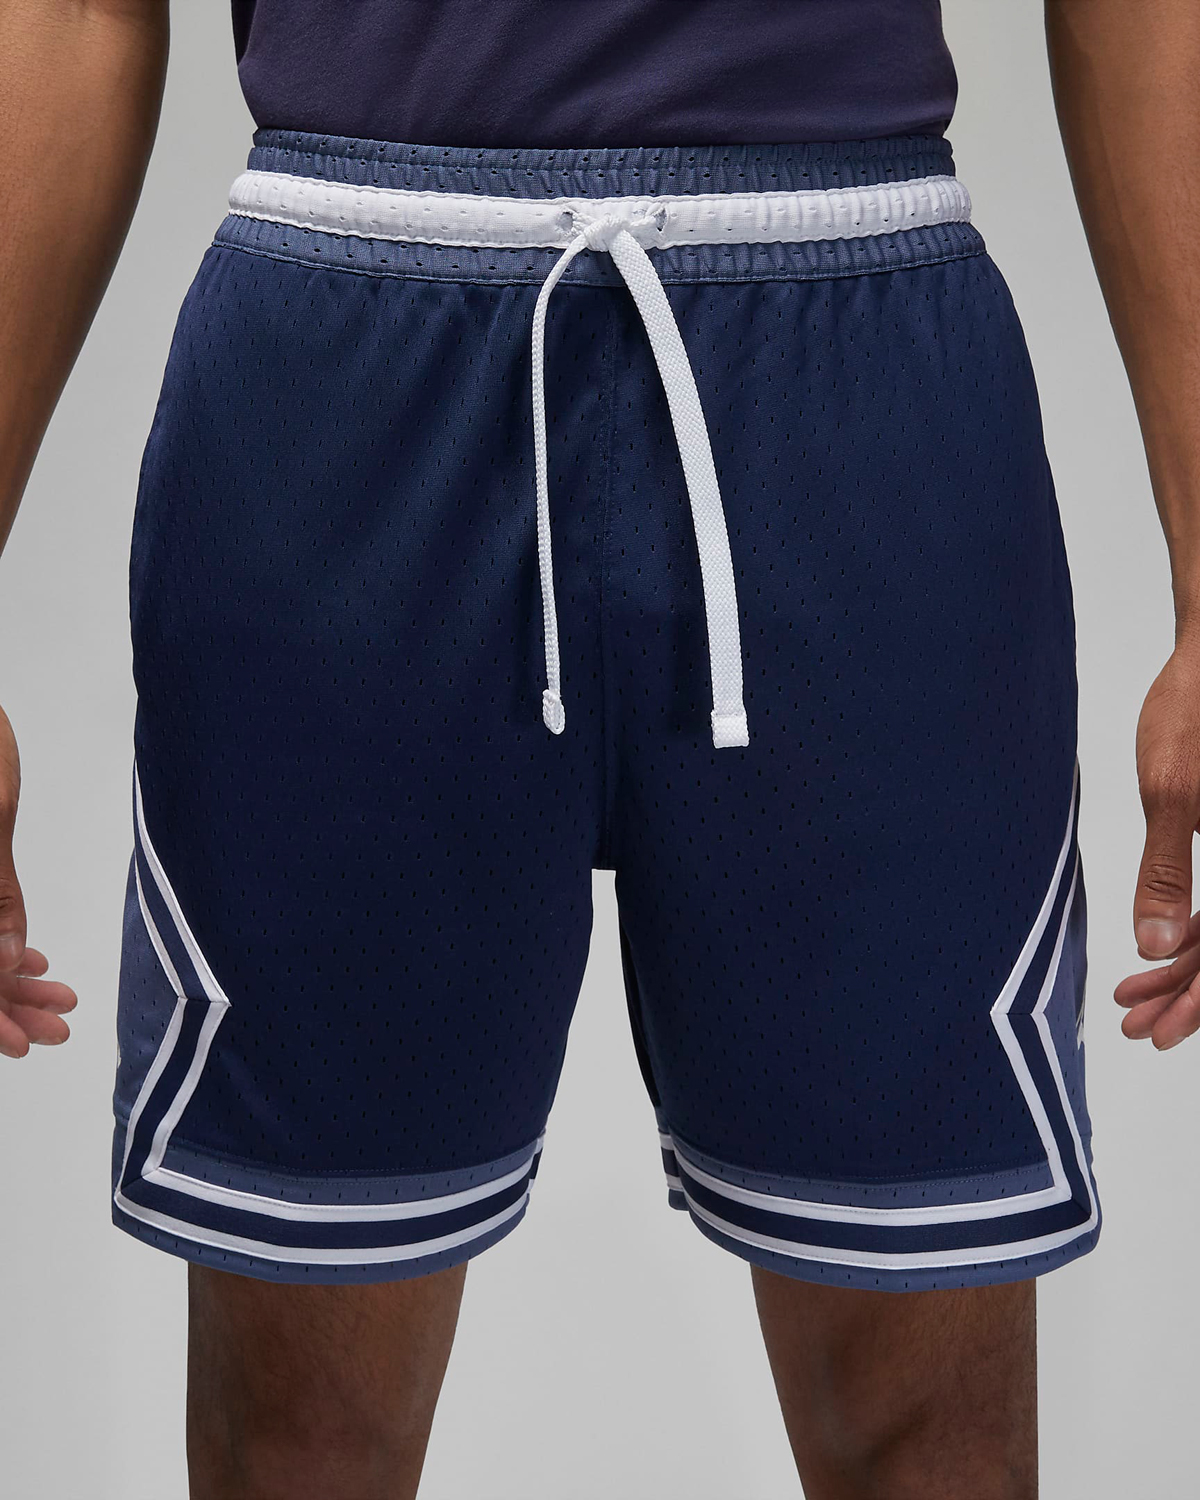 Jordan-Diamond-Shorts-Midnight-Navy-Diffused-Blue-1